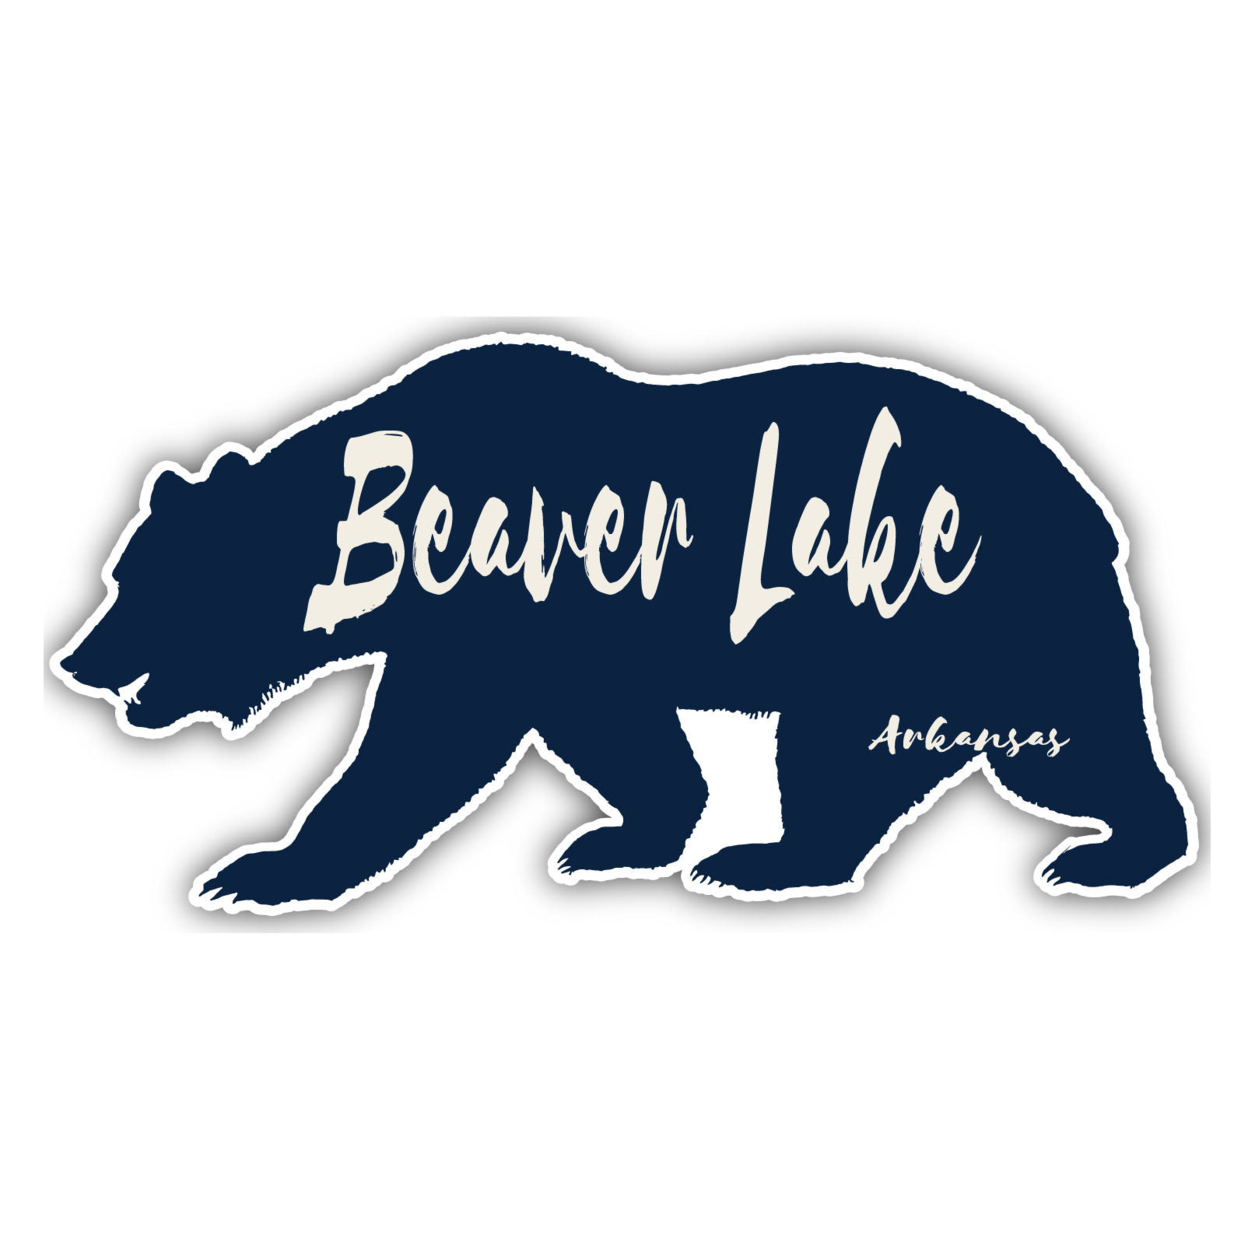 Beaver Lake Arkansas Souvenir Decorative Stickers (Choose Theme And Size) - 4-Pack, 8-Inch, Adventures Awaits